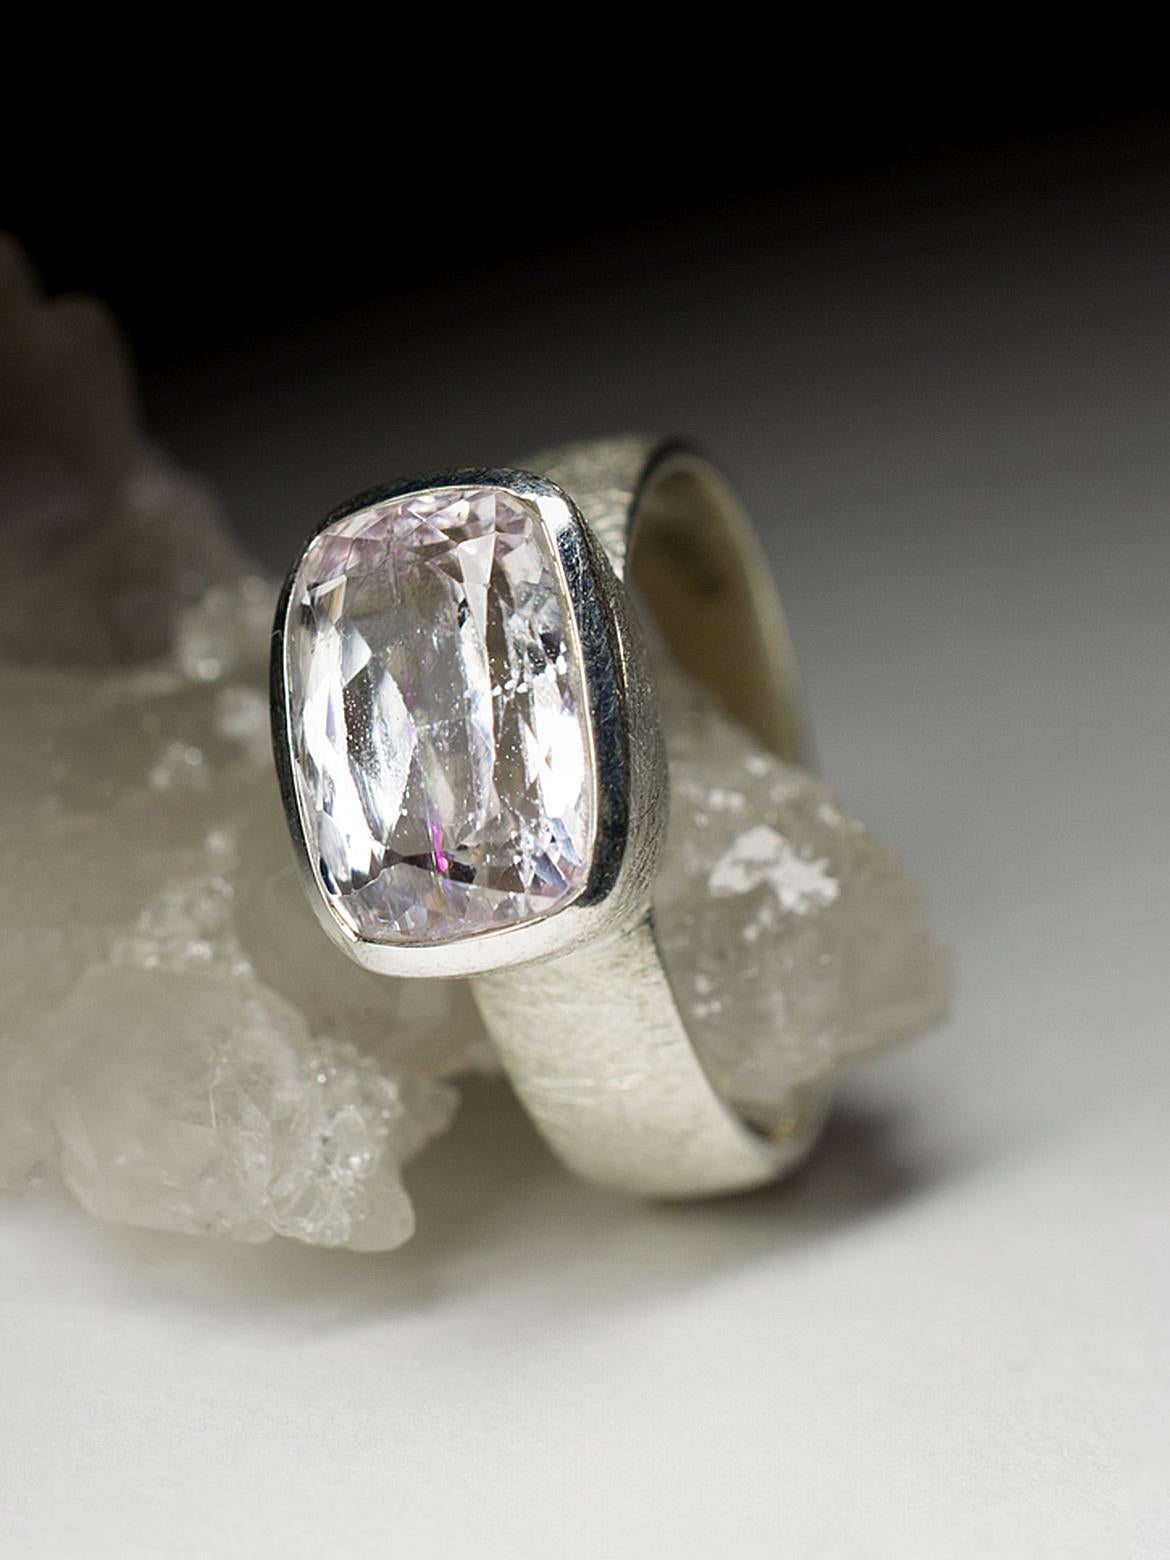 Unisex sterling silver ring with natural Kunzite
kunzite origin - Pakistan
ring weight - 5.5 grams
ring size - 8 US
kunzite measurements - 0.28 х 0.31 х 0.43 in / 7 х 8 х 11 mm
